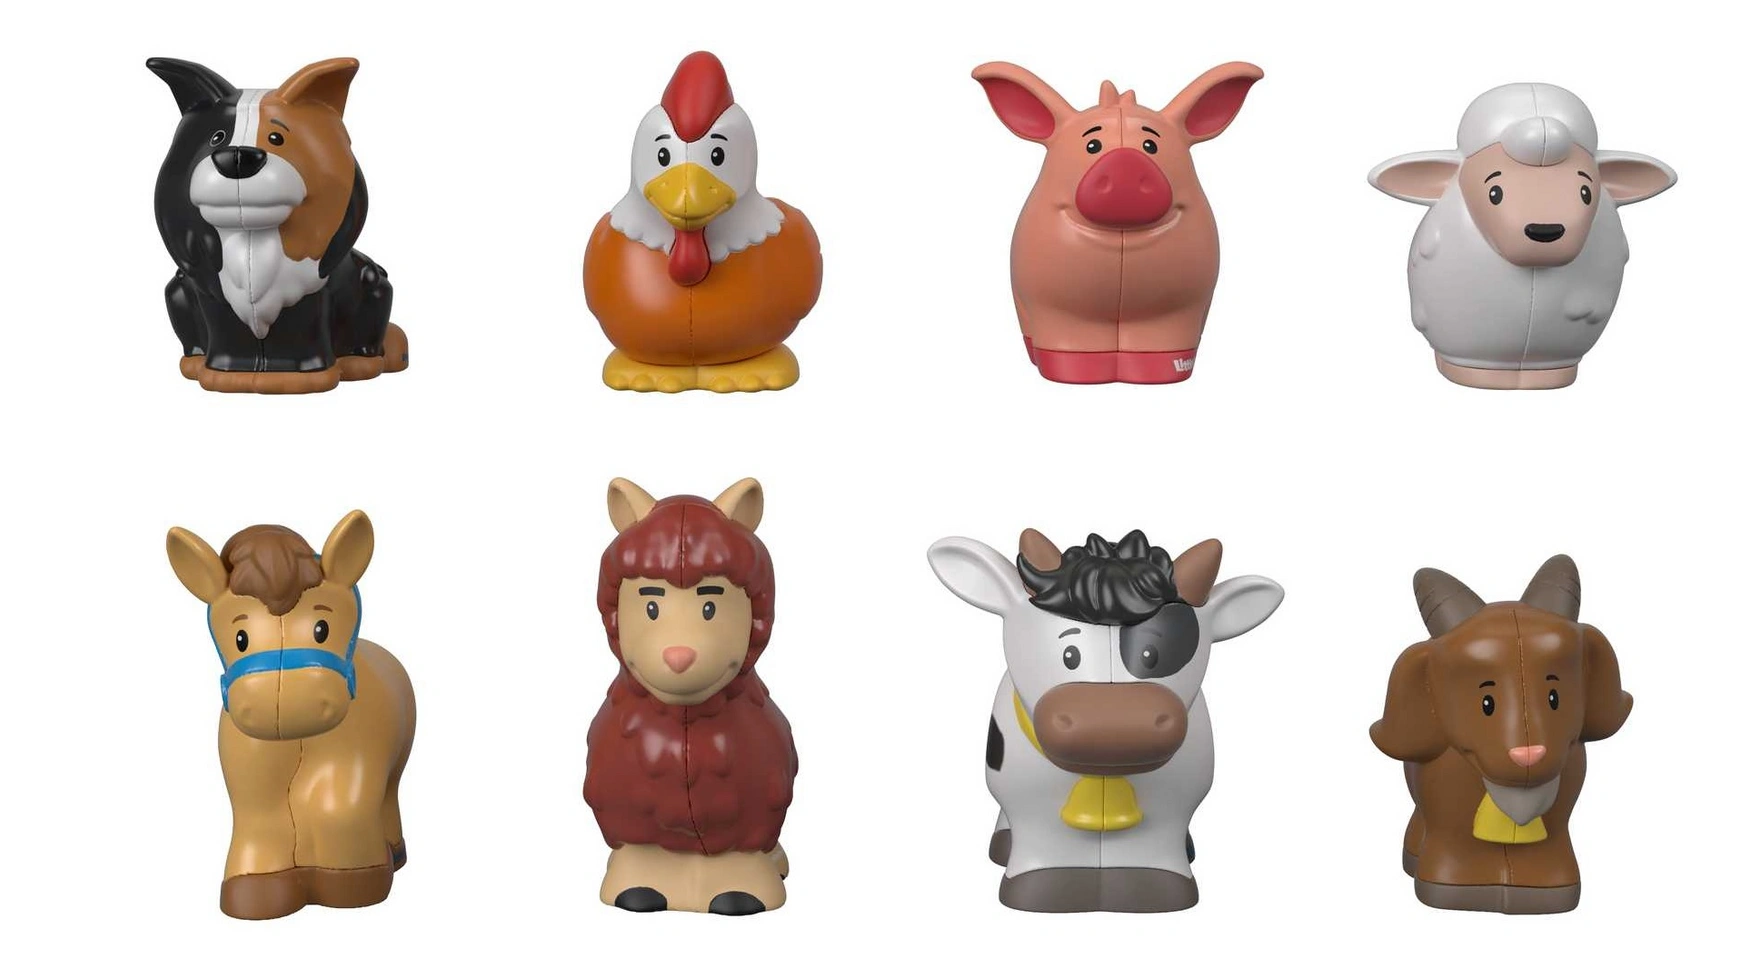 Набор Fisher Price Little People Farm Animals из восьми фигурок балансиры человечки издерева